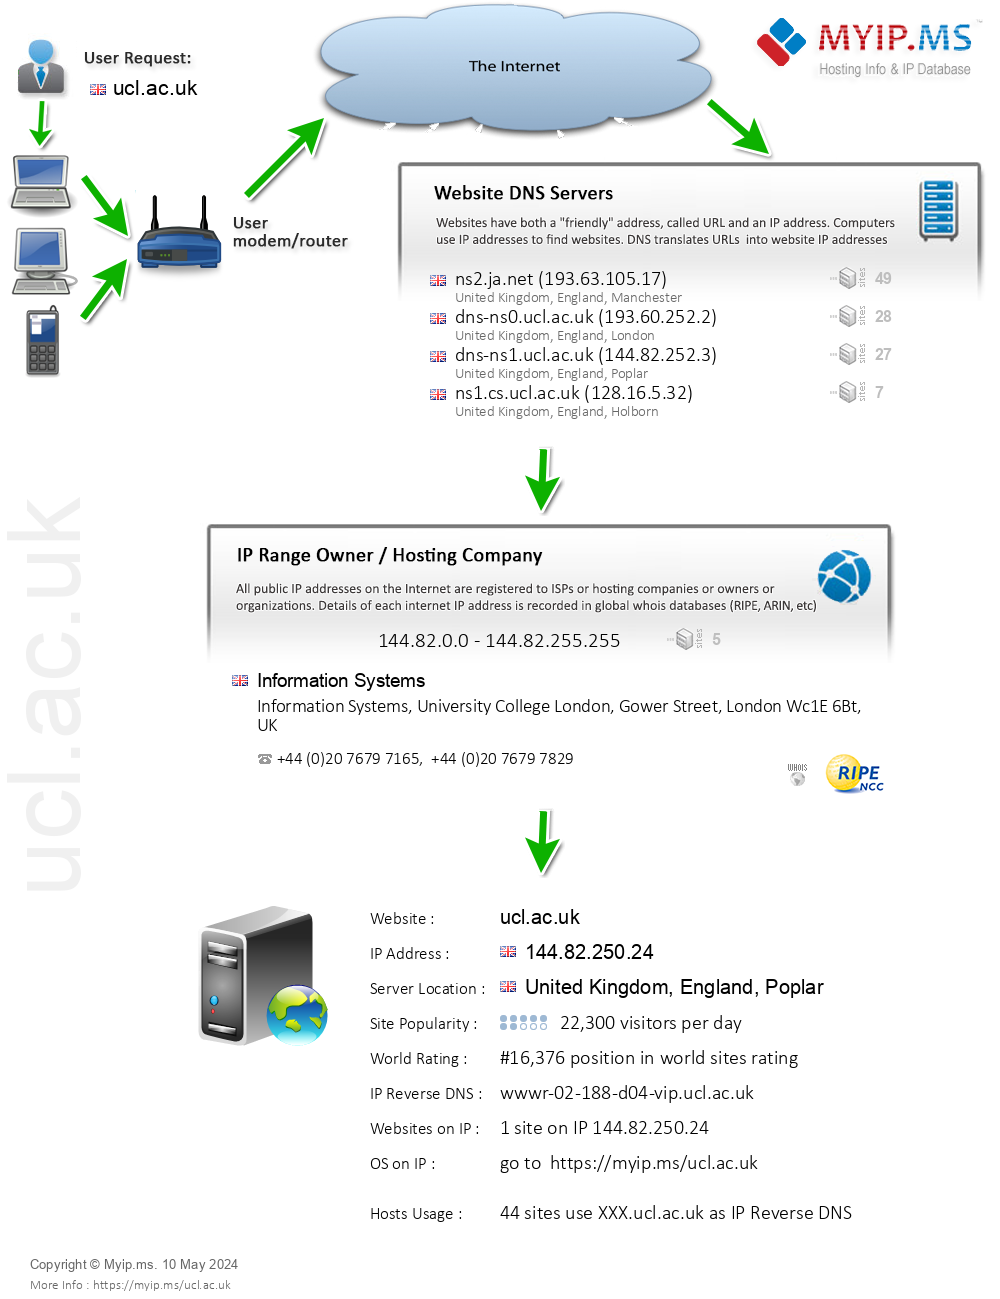 Ucl.ac.uk - Website Hosting Visual IP Diagram